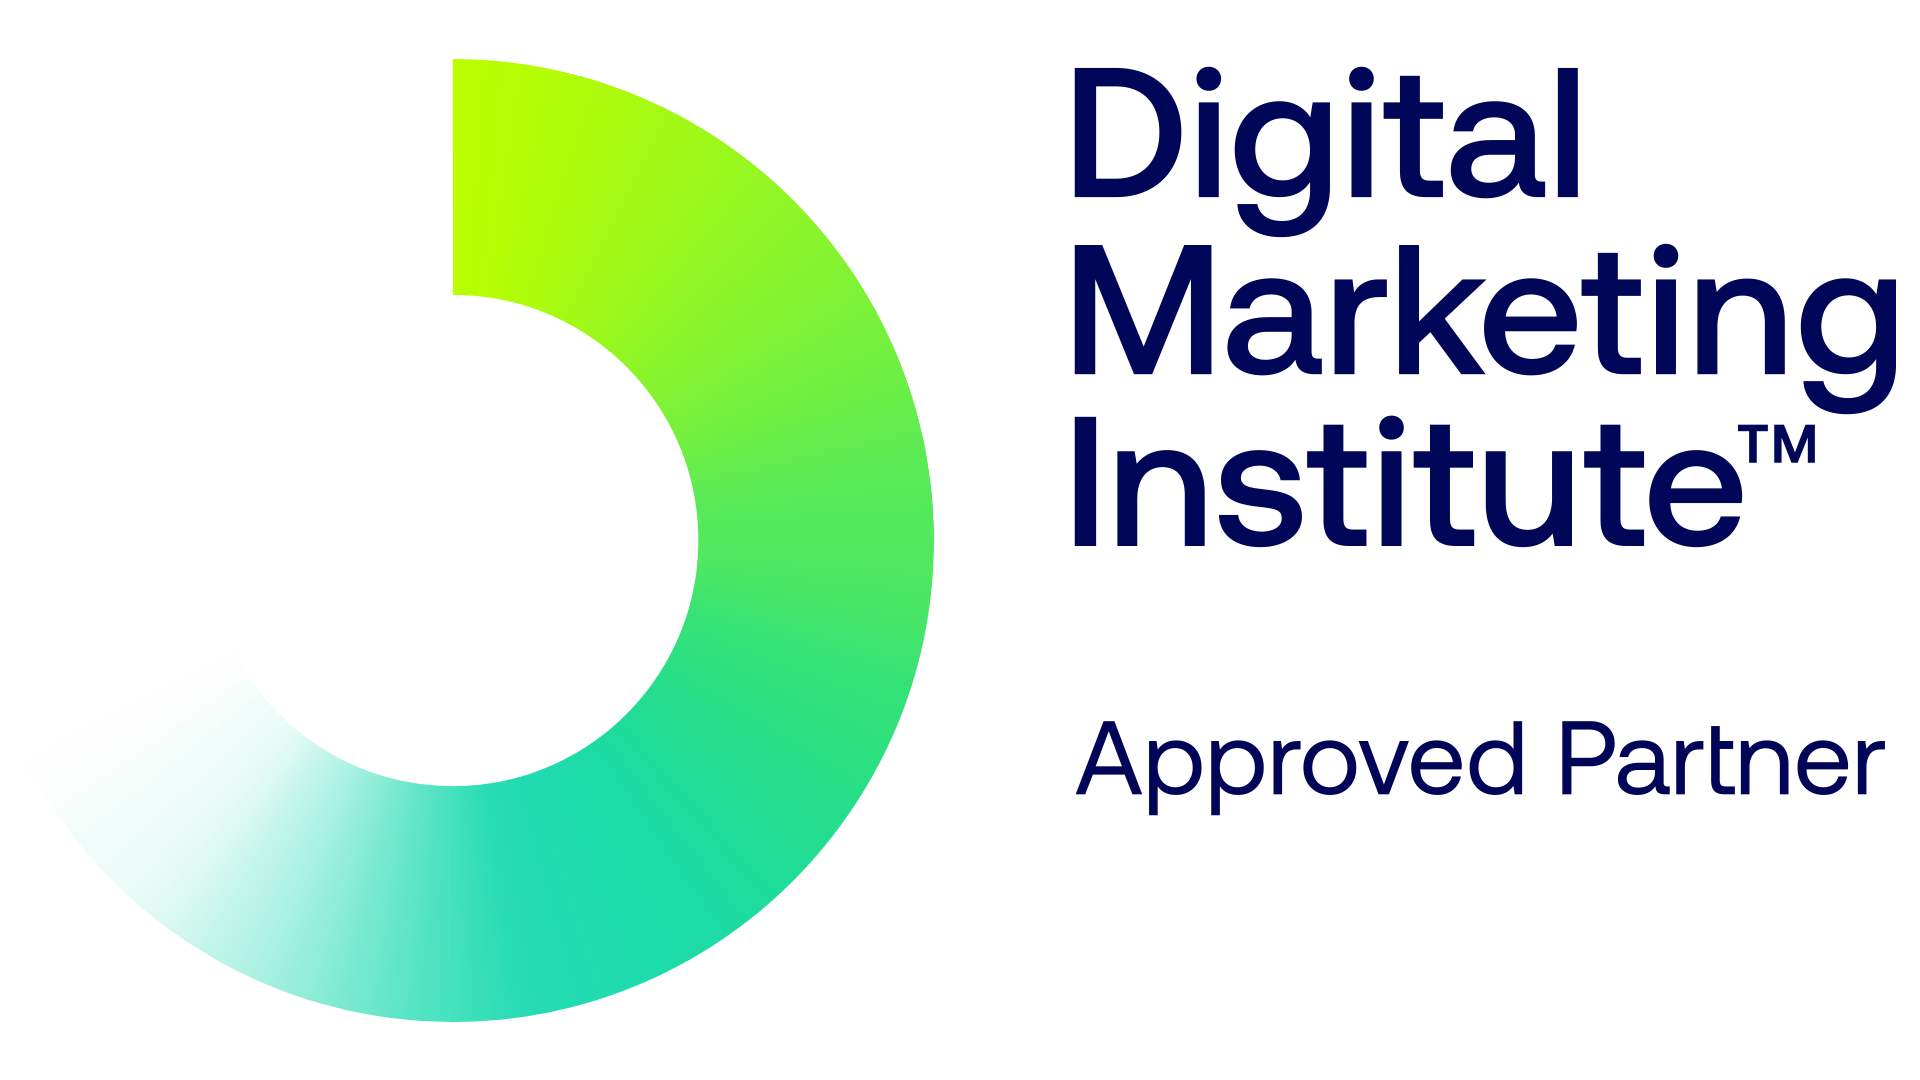 Digital Marketing Institute Approved Partner logo